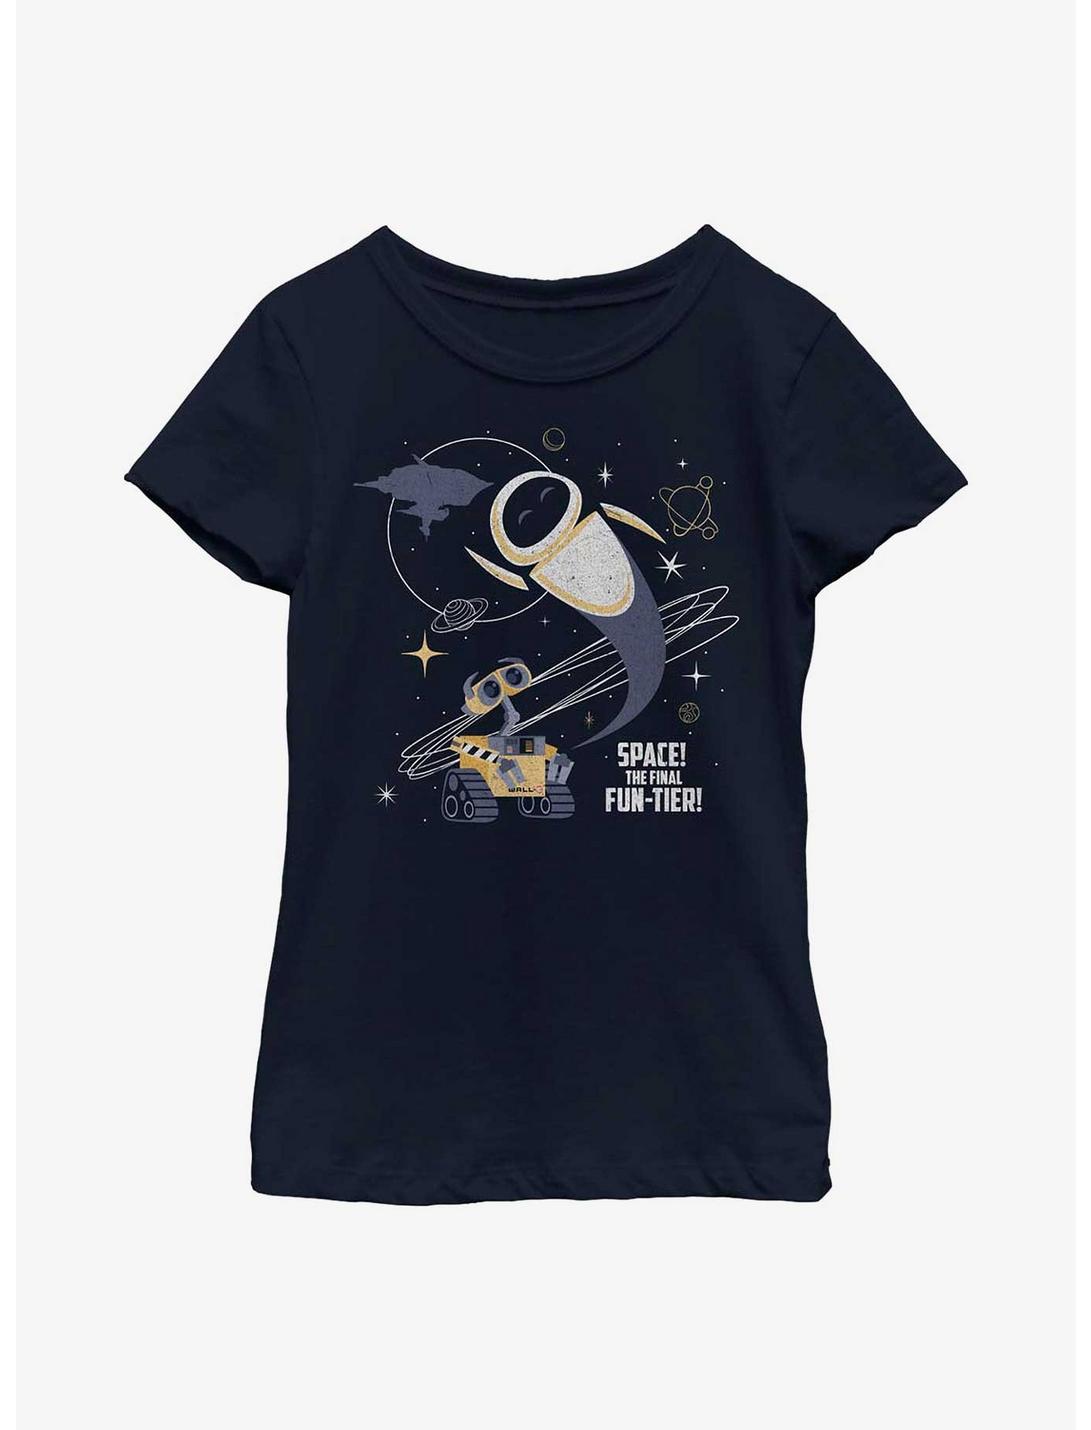 Disney Pixar Wall-E Retro Space Fun-tier Youth Girls T-Shirt, NAVY, hi-res